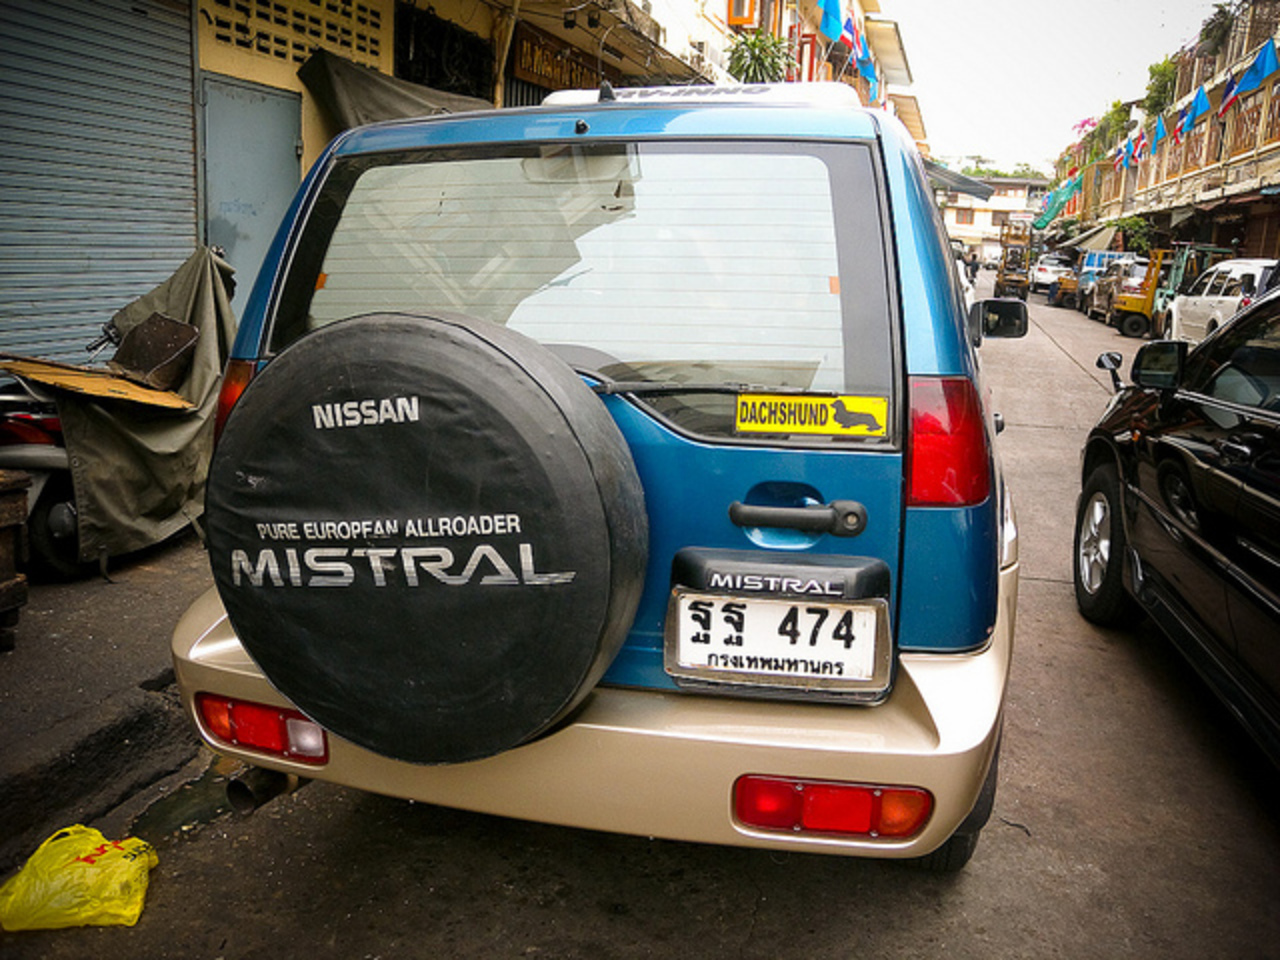 Nissan Mistral in Bangkok | Flickr - Photo Sharing!